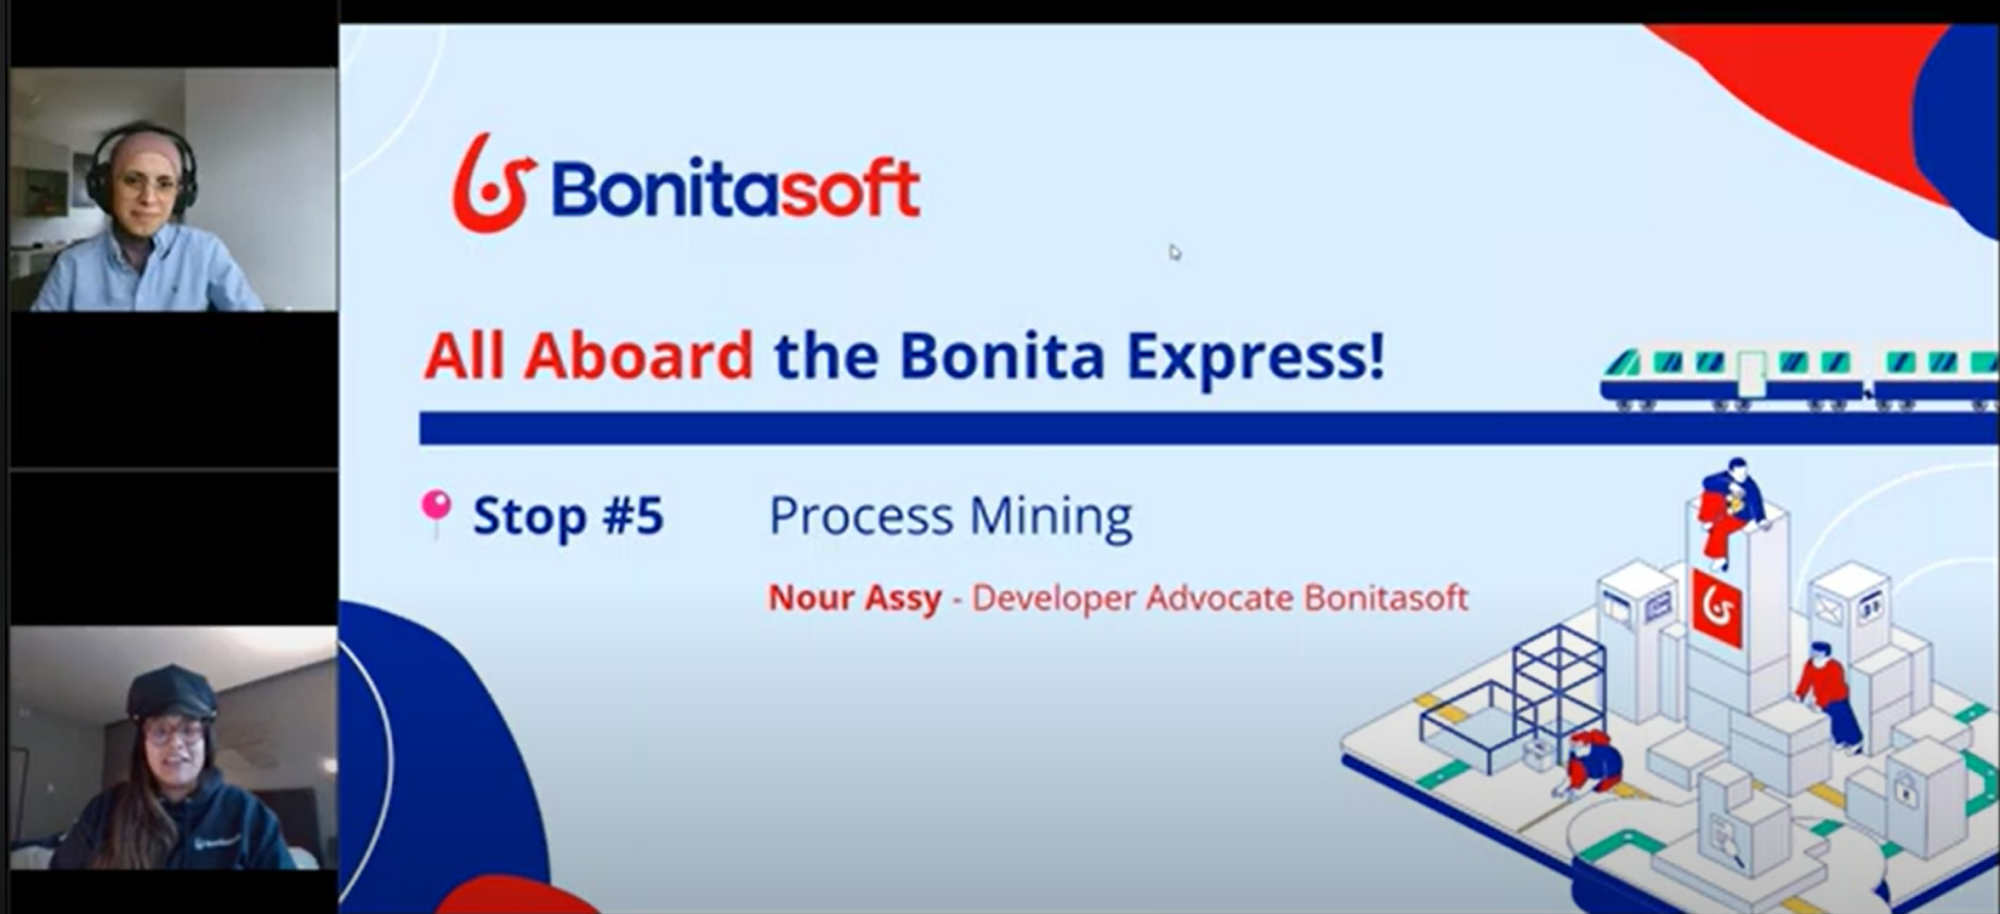 All Aboard the Bonita Express! Stop #5